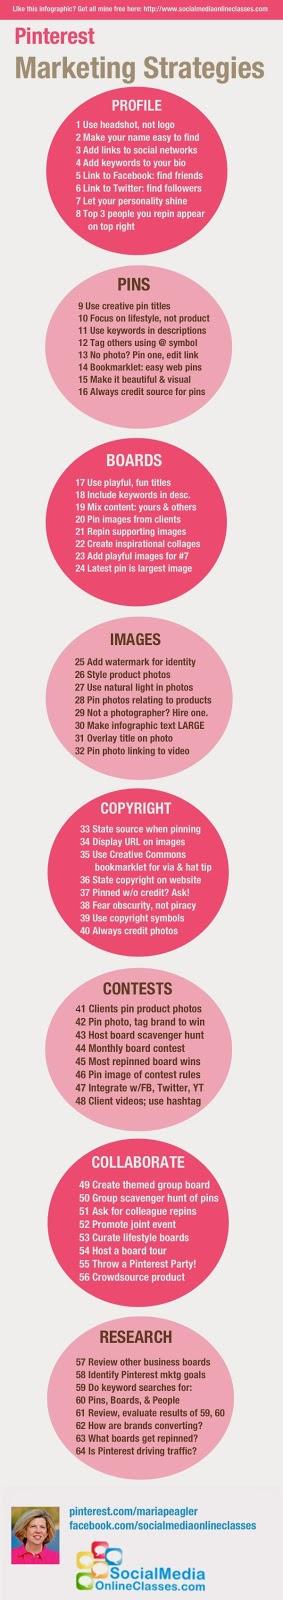 Estrategias de Marketing en Pinterest - #Infografía #Marketing #Pinterest